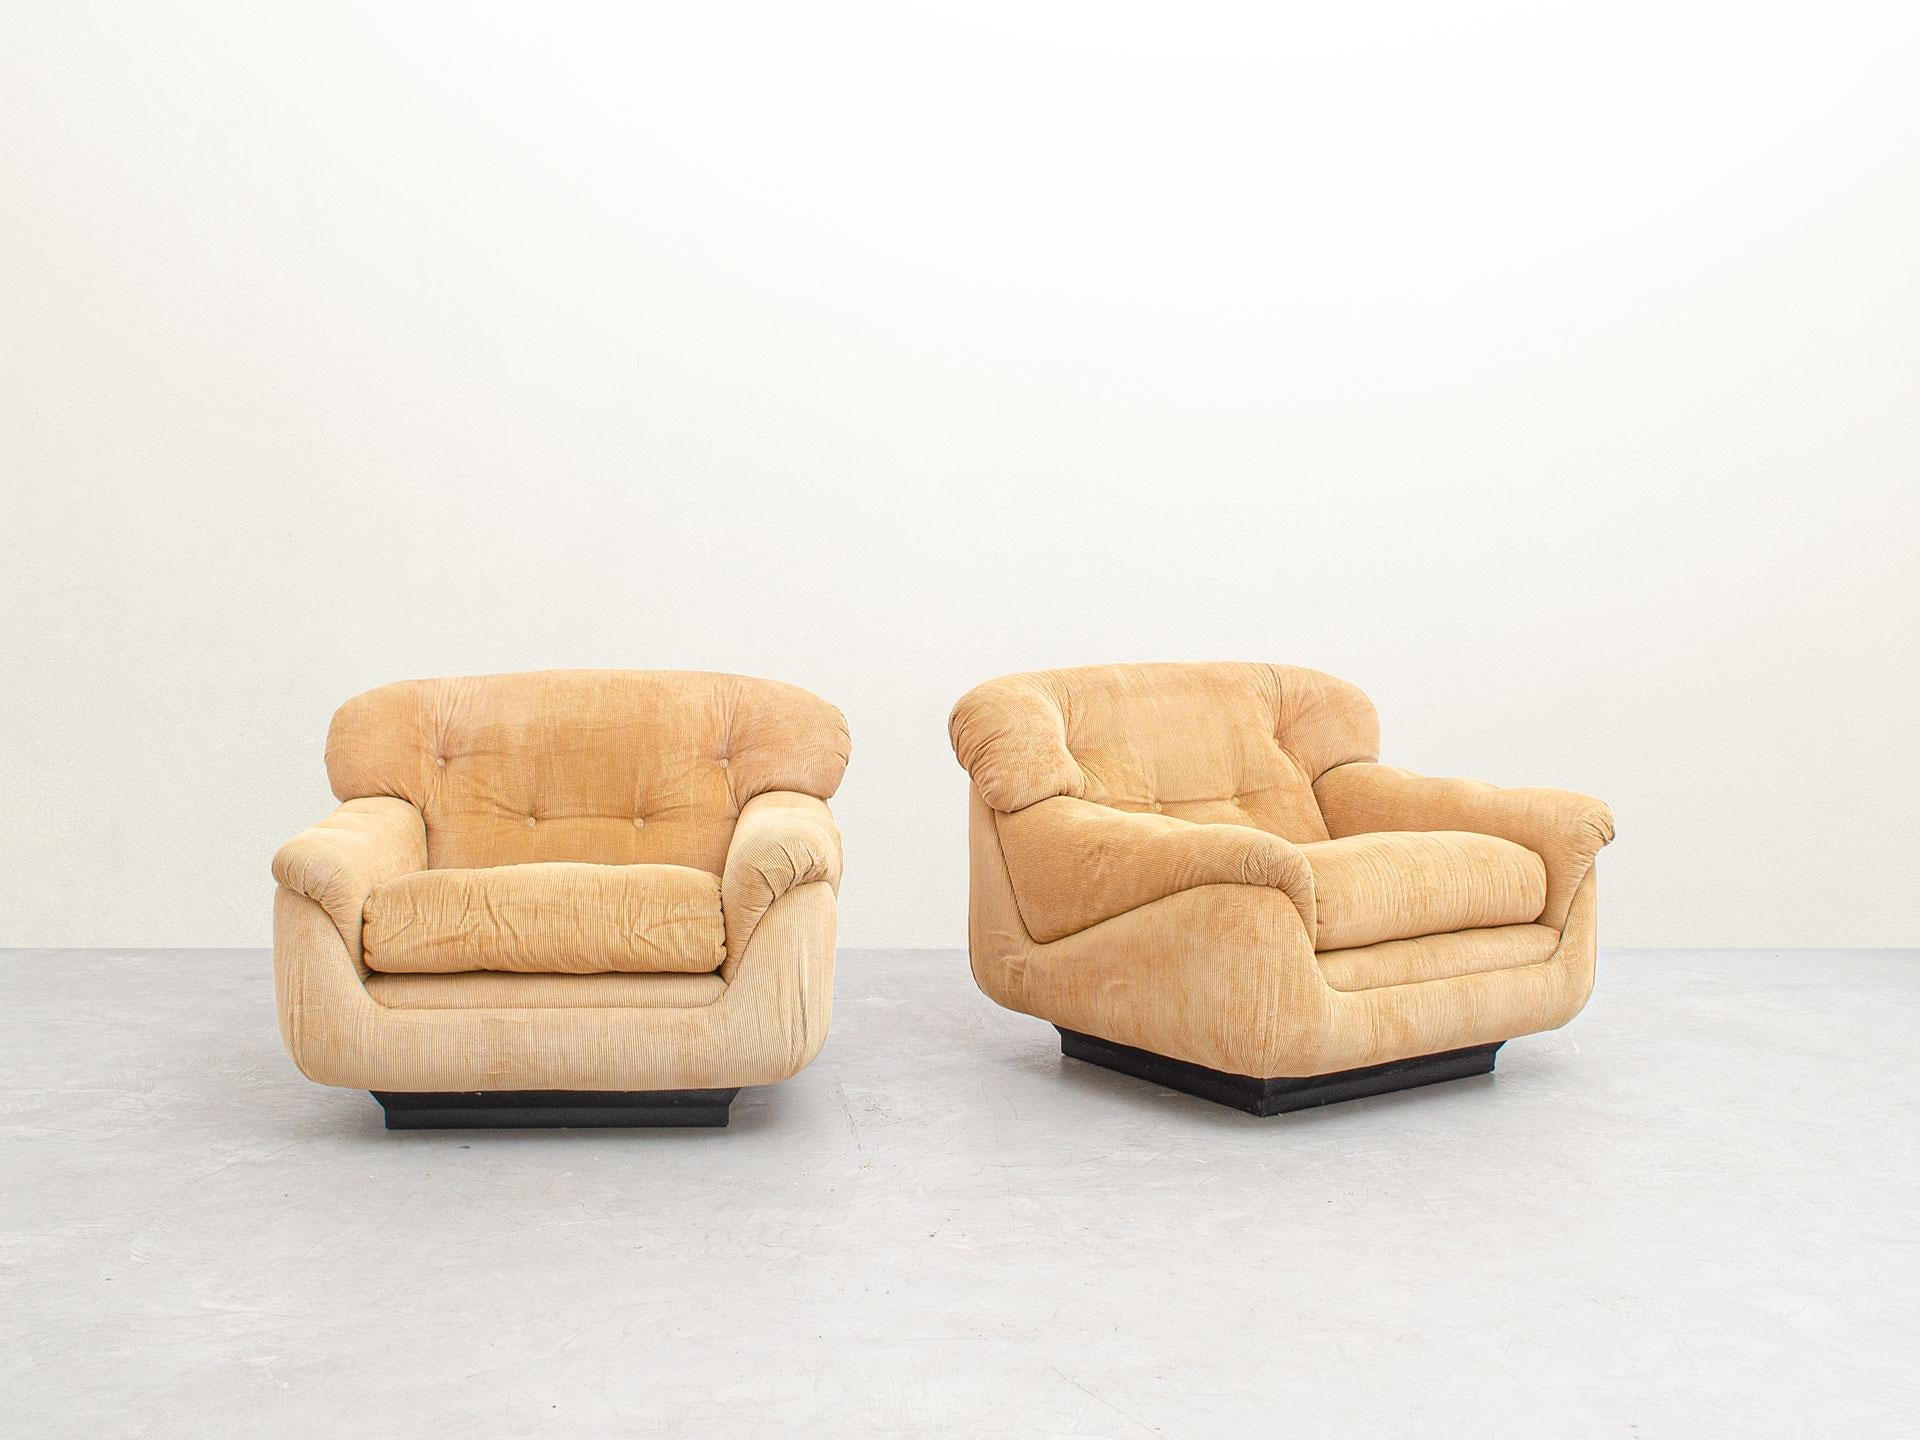 Mid-Century Modern Rare Pair of Armchairs by Jorge Zalszupin, 60's Midcentury Brazilian Design